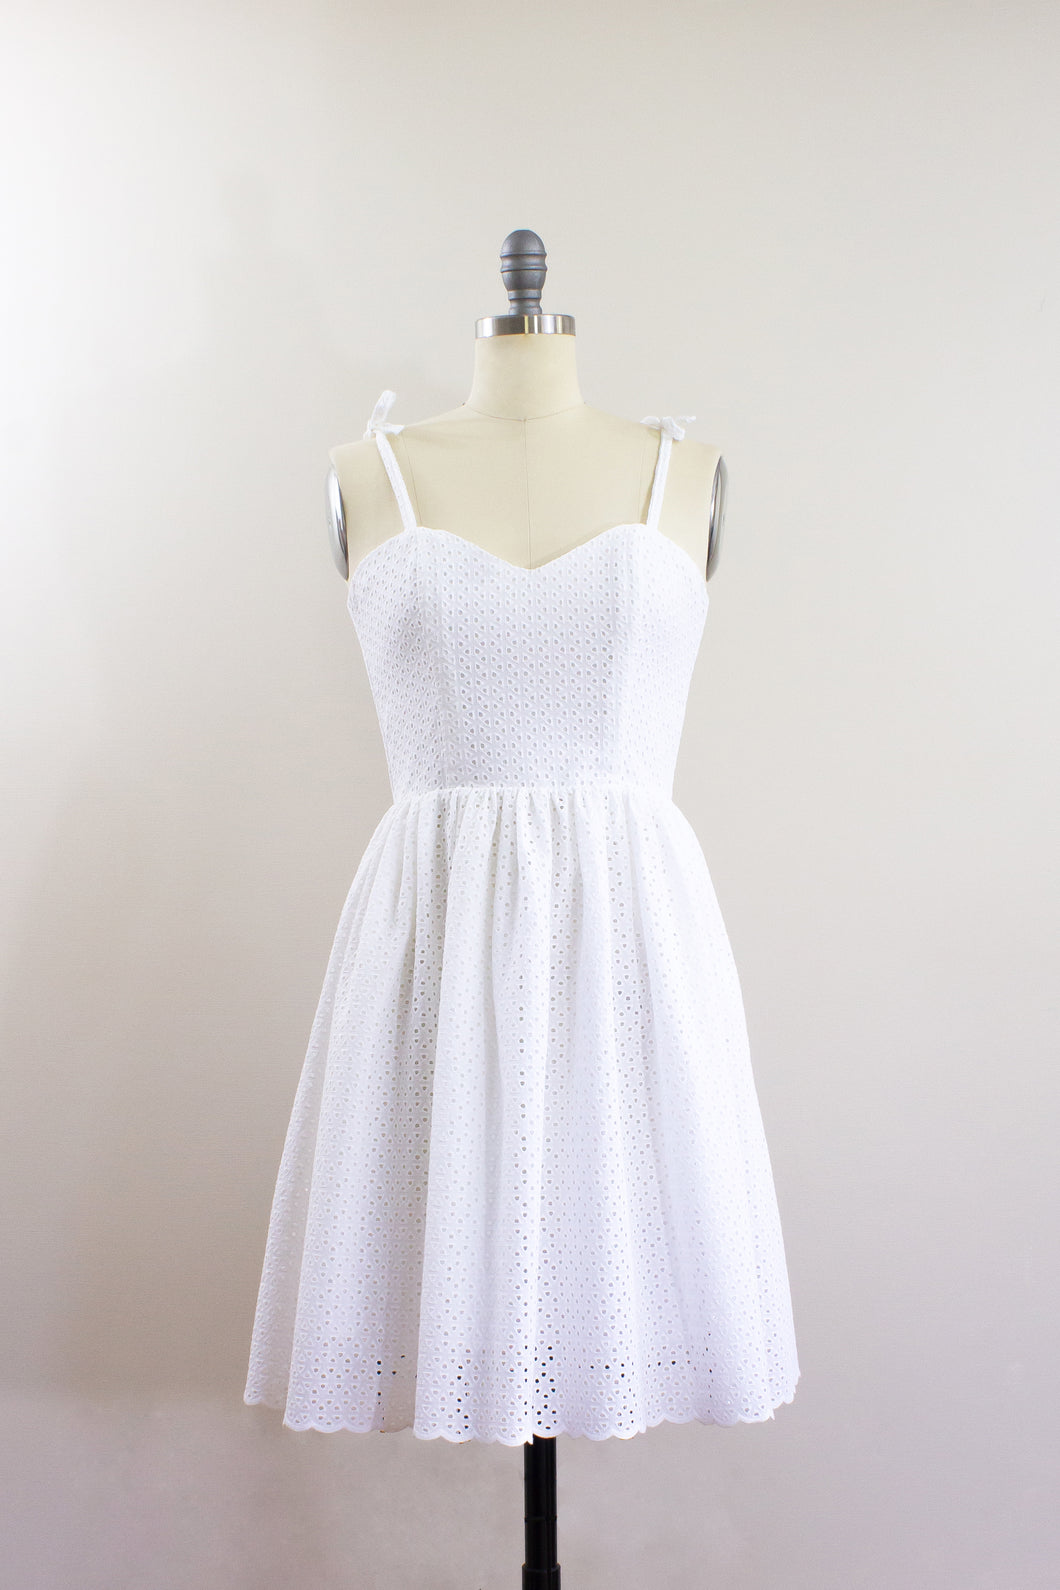 Elisabetta Bellu SS2020 Dahlia handmade white cotton eyelet short dress with full gathered skirt front